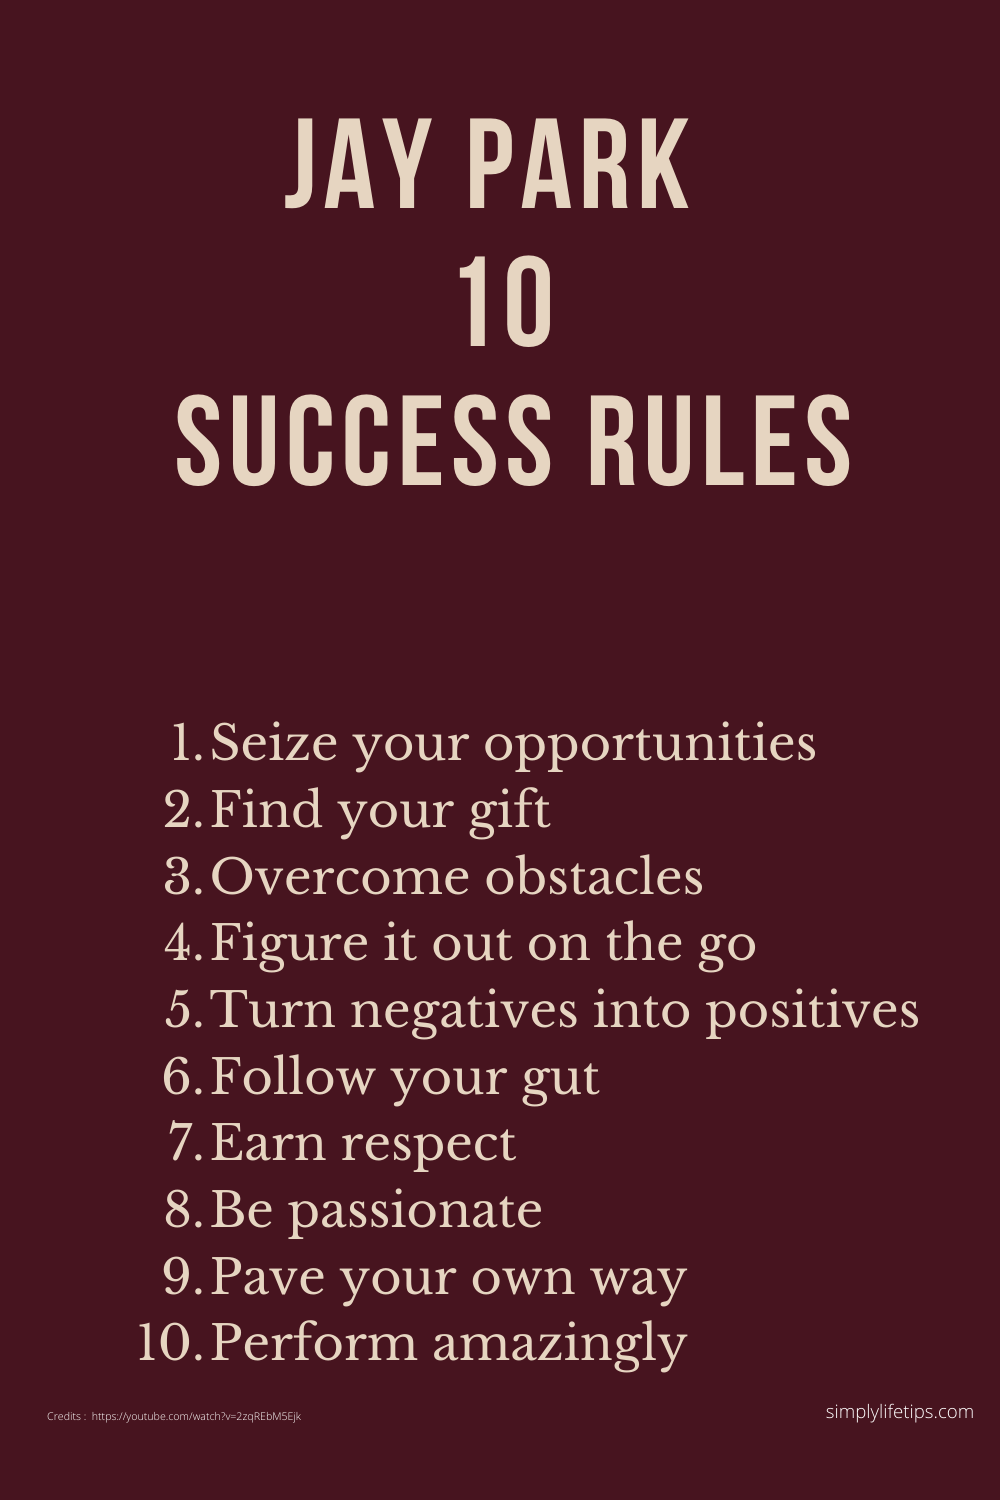 Jay Park Top 10 Success Rules